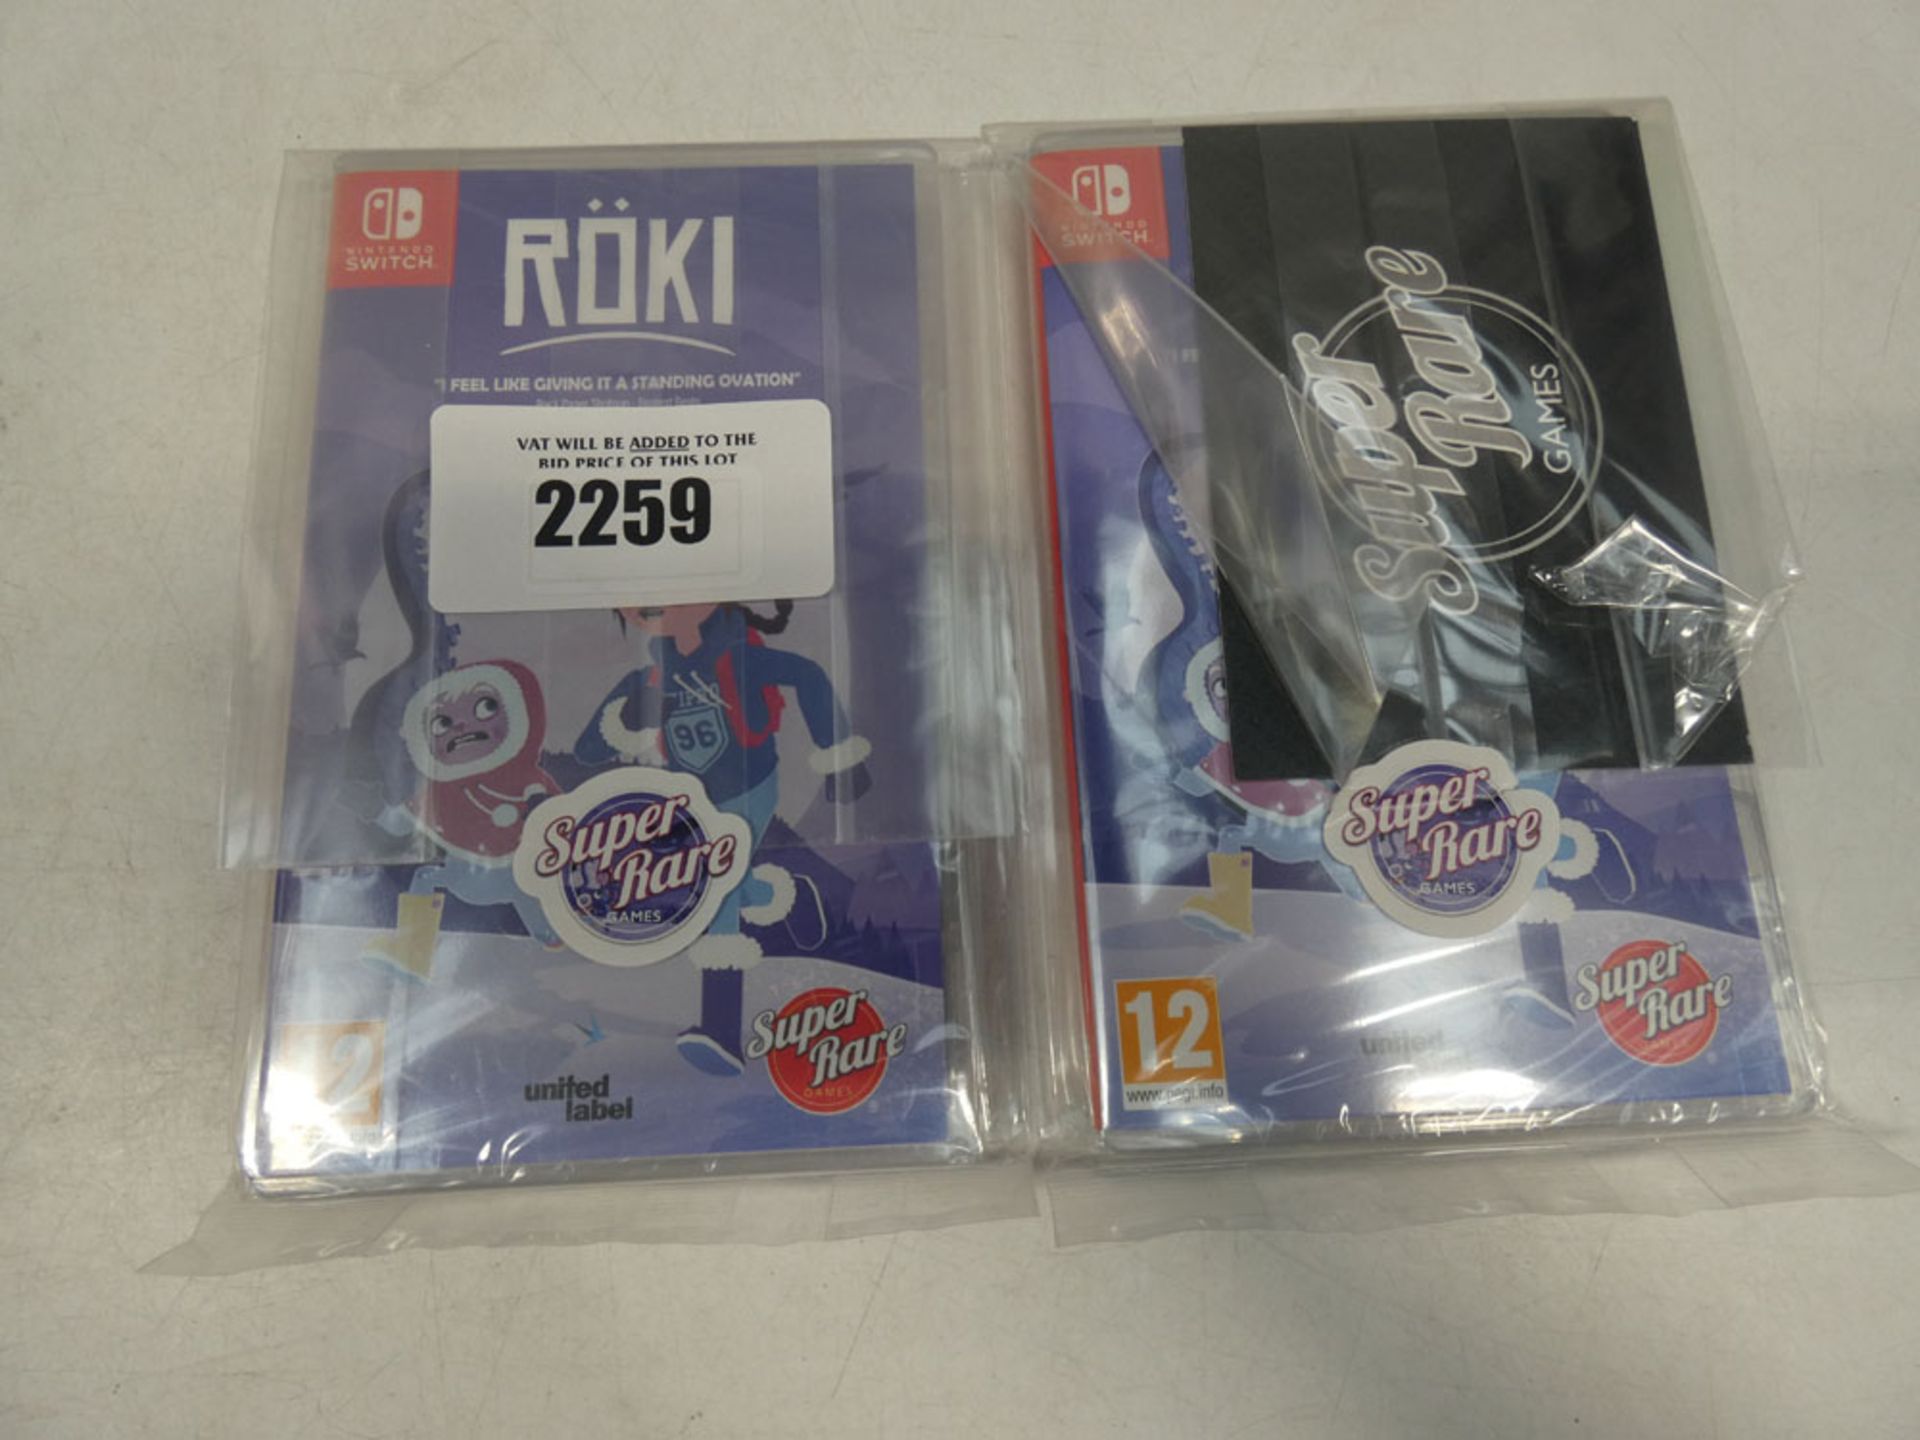 2x Roki 'Super Rare' Switch games